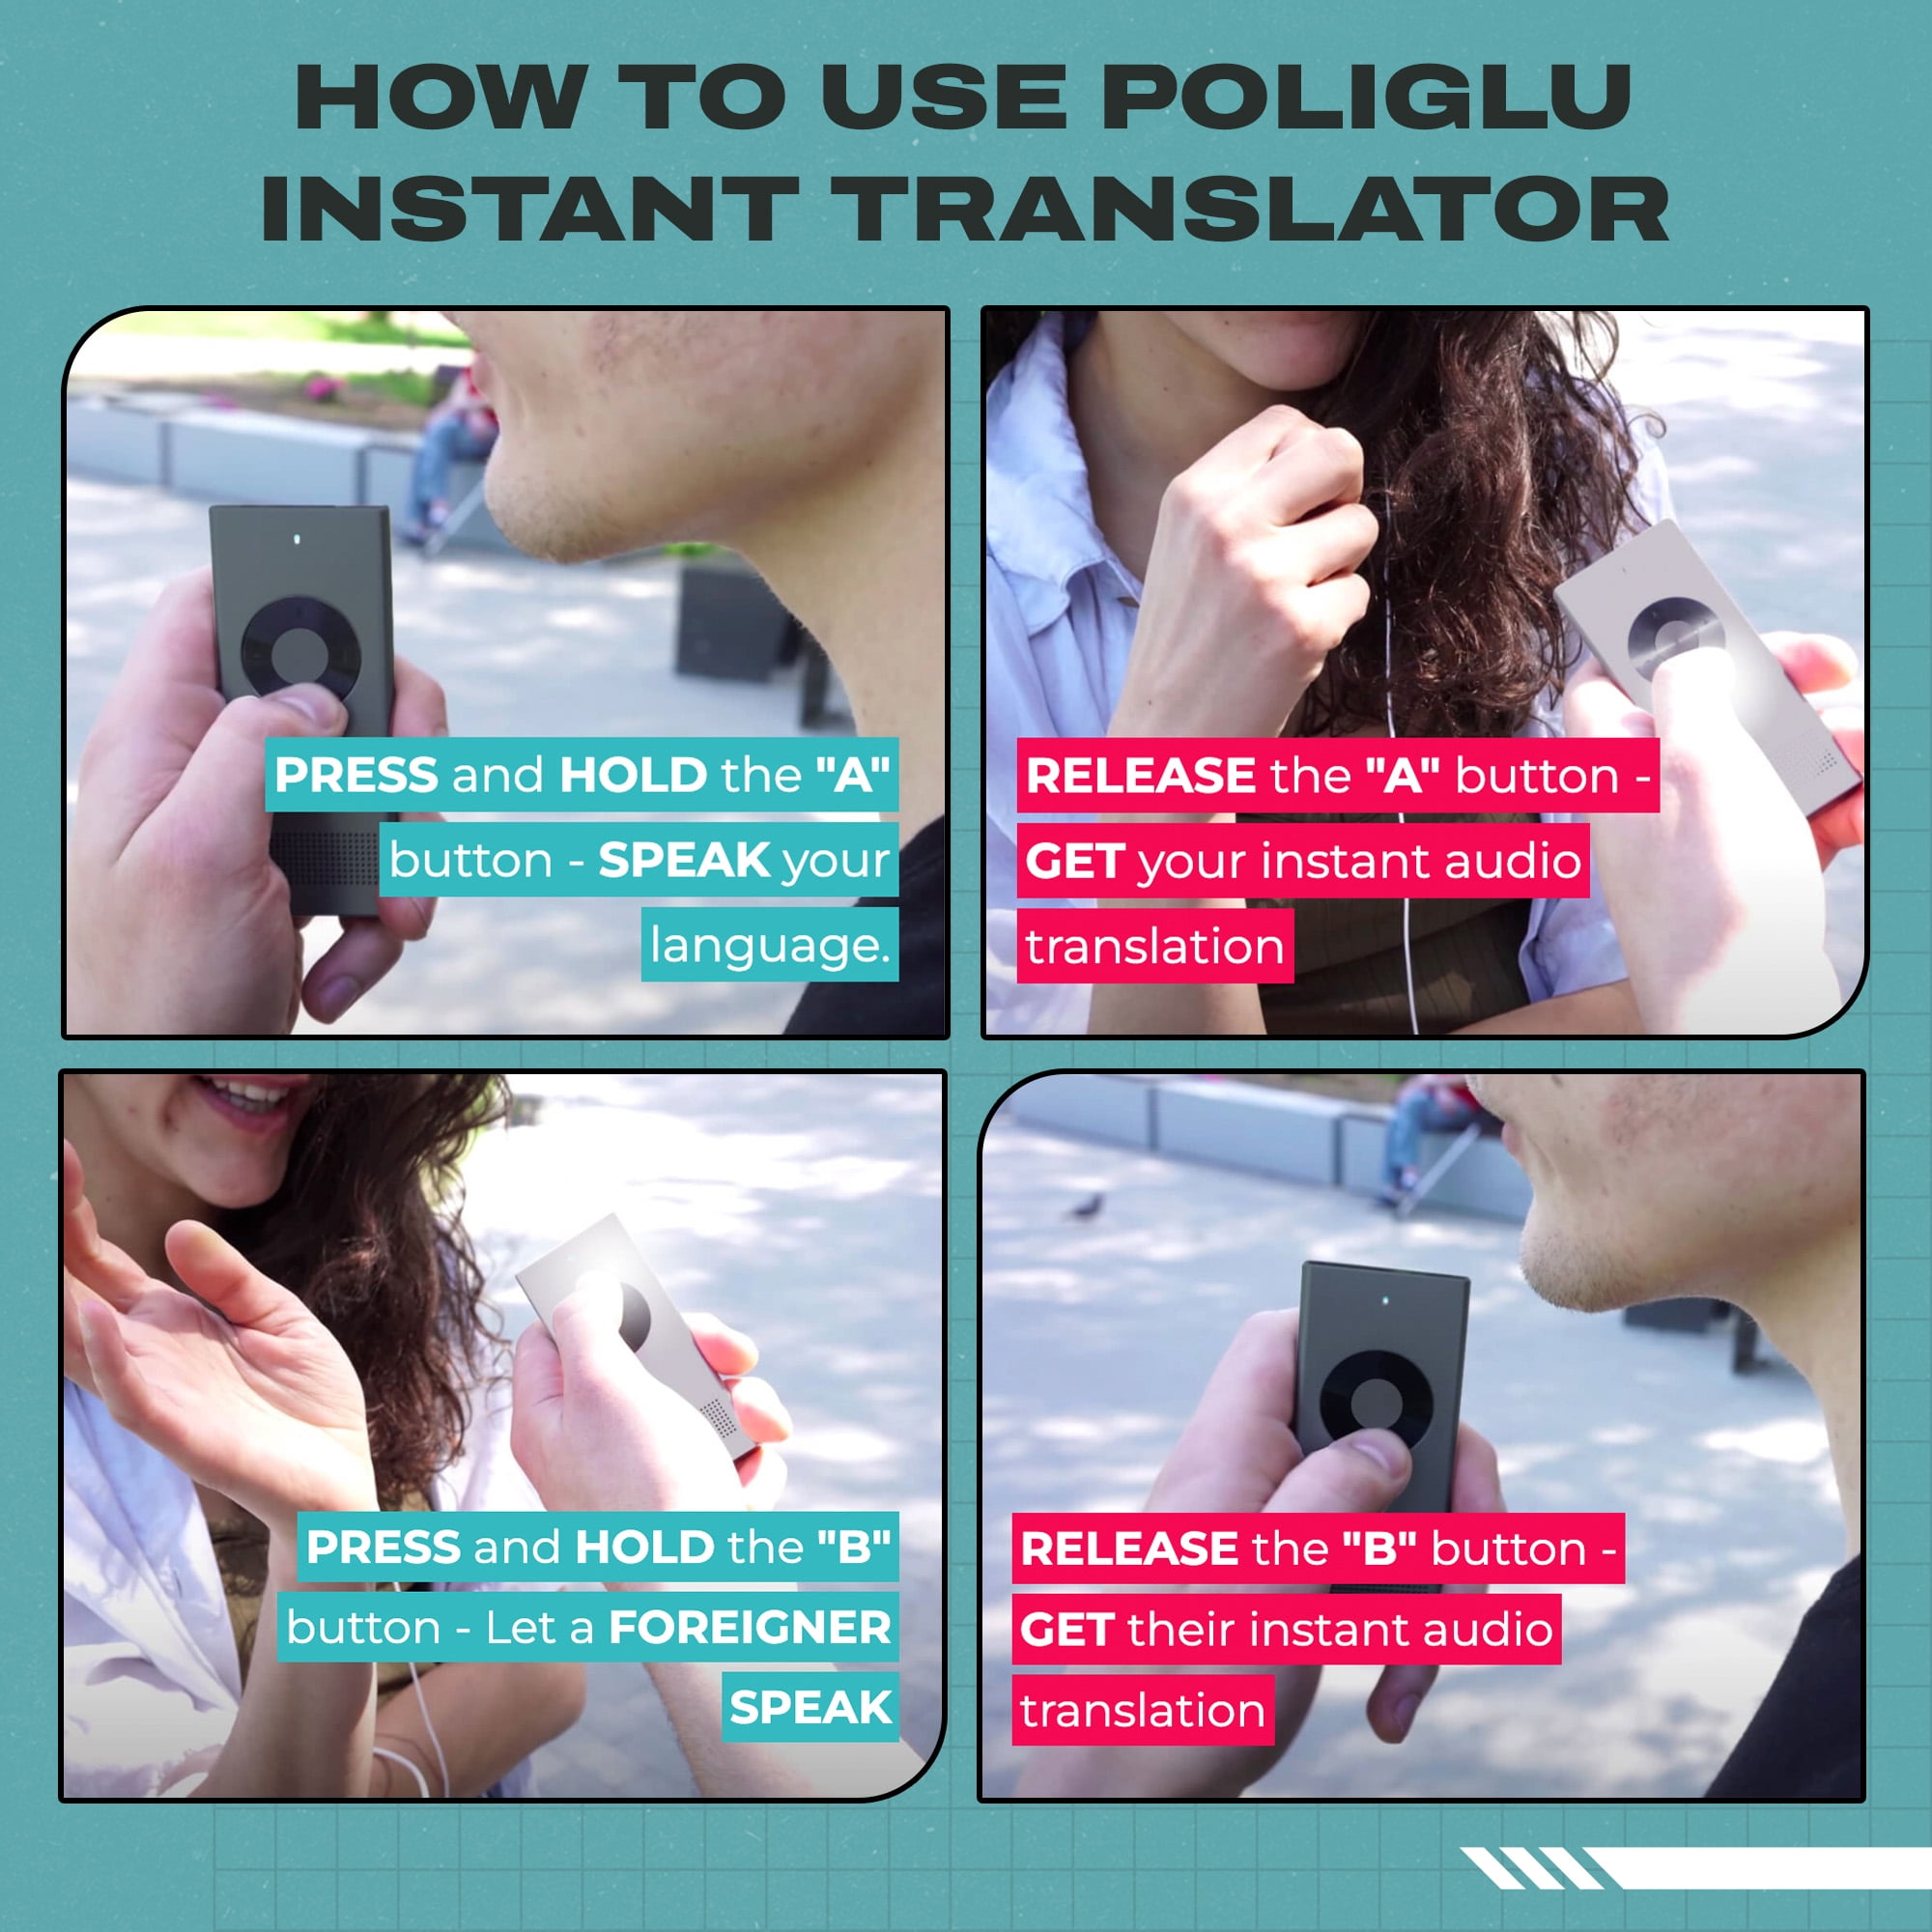 poliglu instant translator – Compra poliglu instant translator con